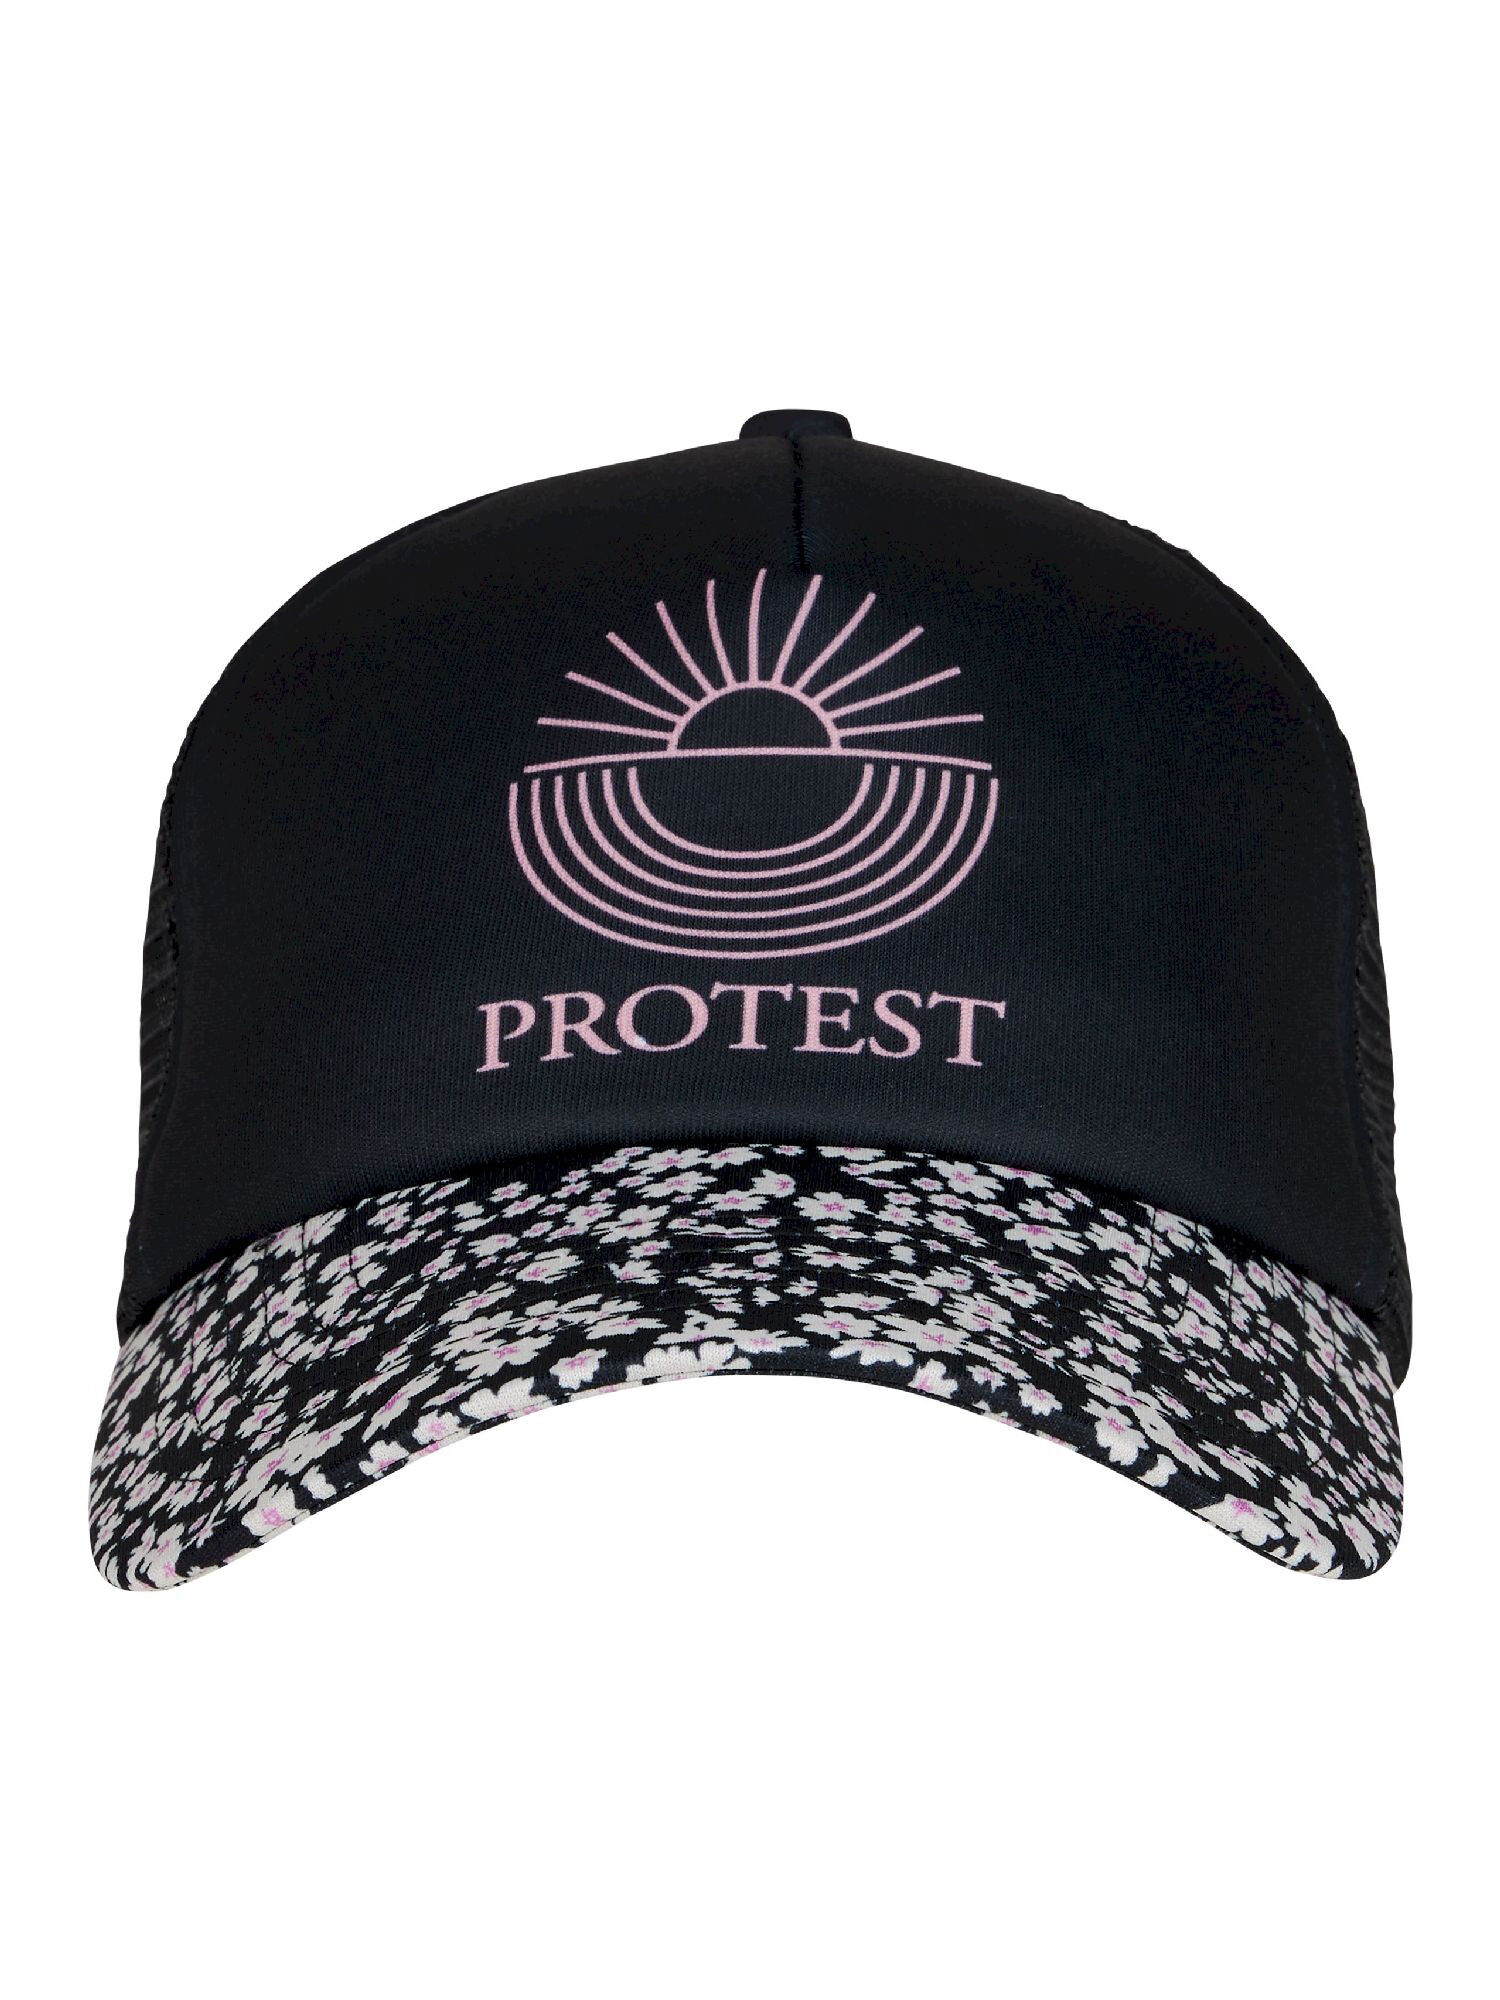 Protest Prtkeewee - Cap - Women's | Hardloop